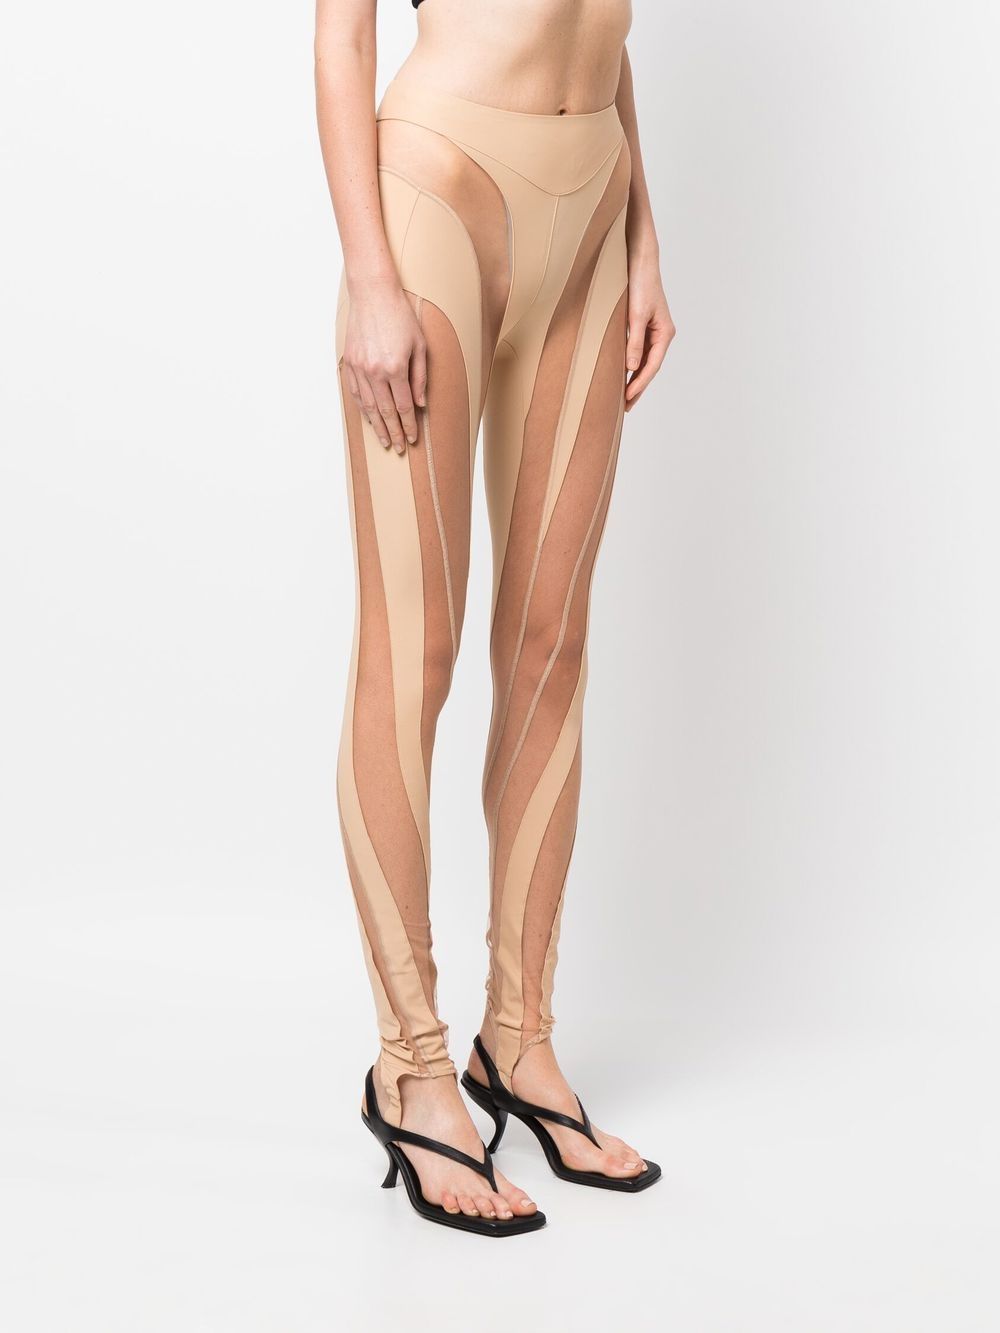 spiral leggings woman tan and black in polyamide